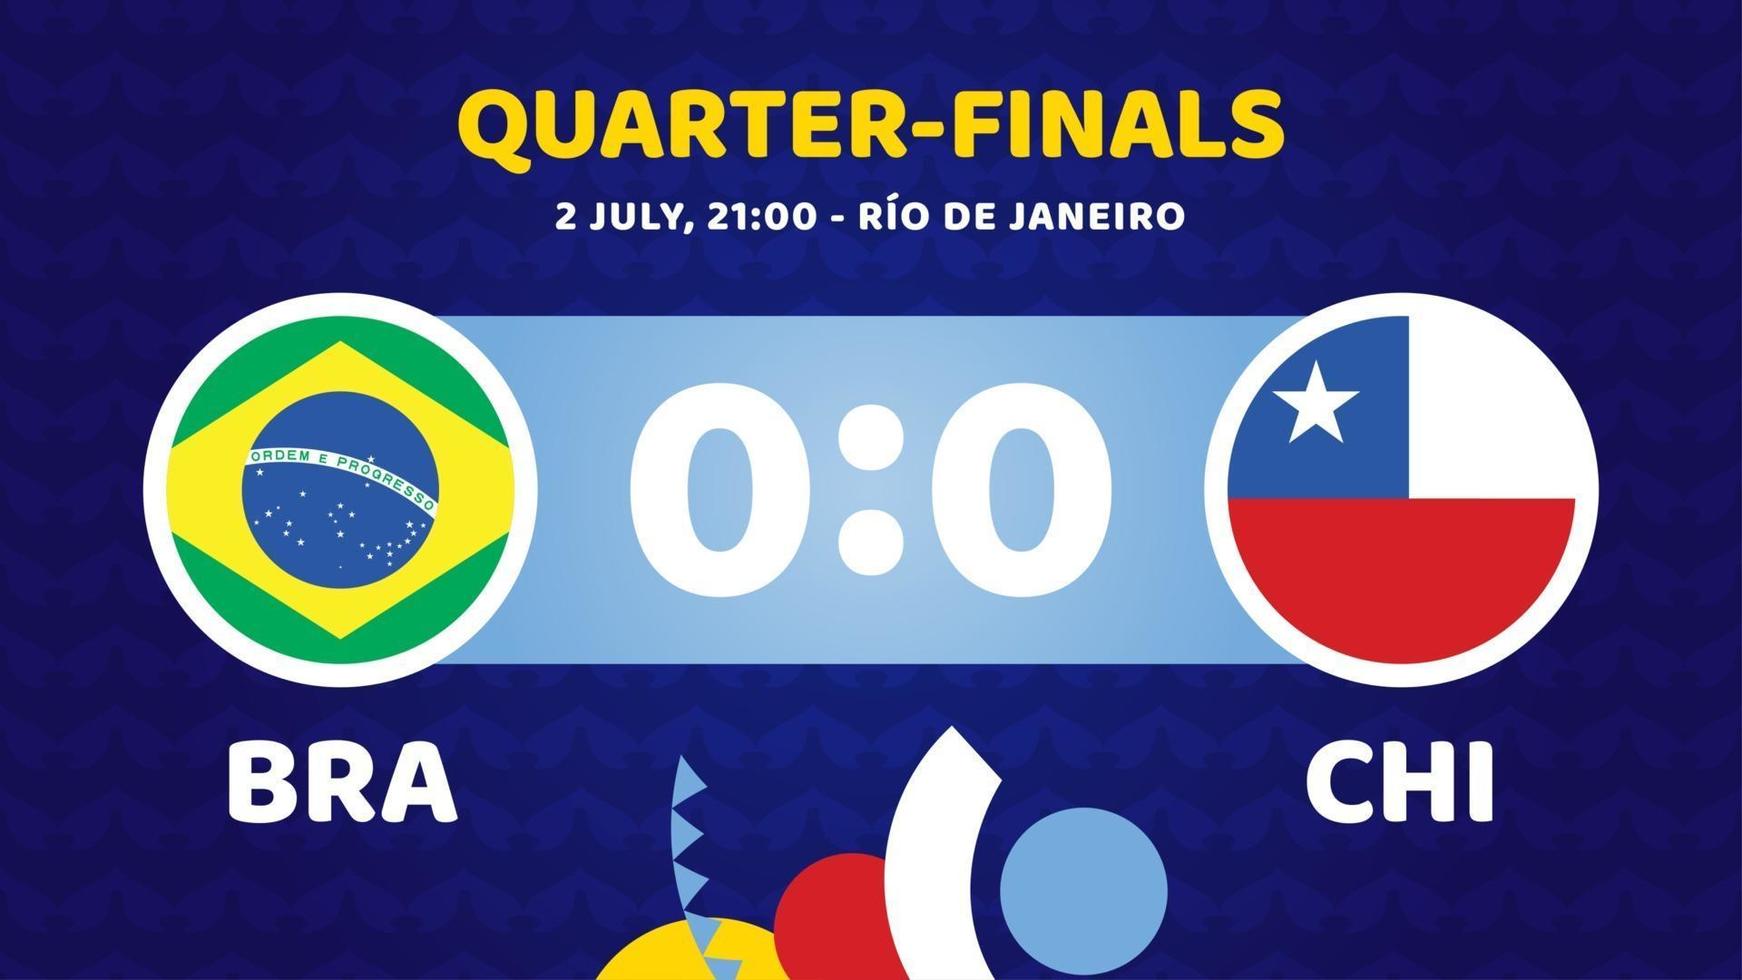 Brazil vs Chile match vector illustration Football 2021 championship